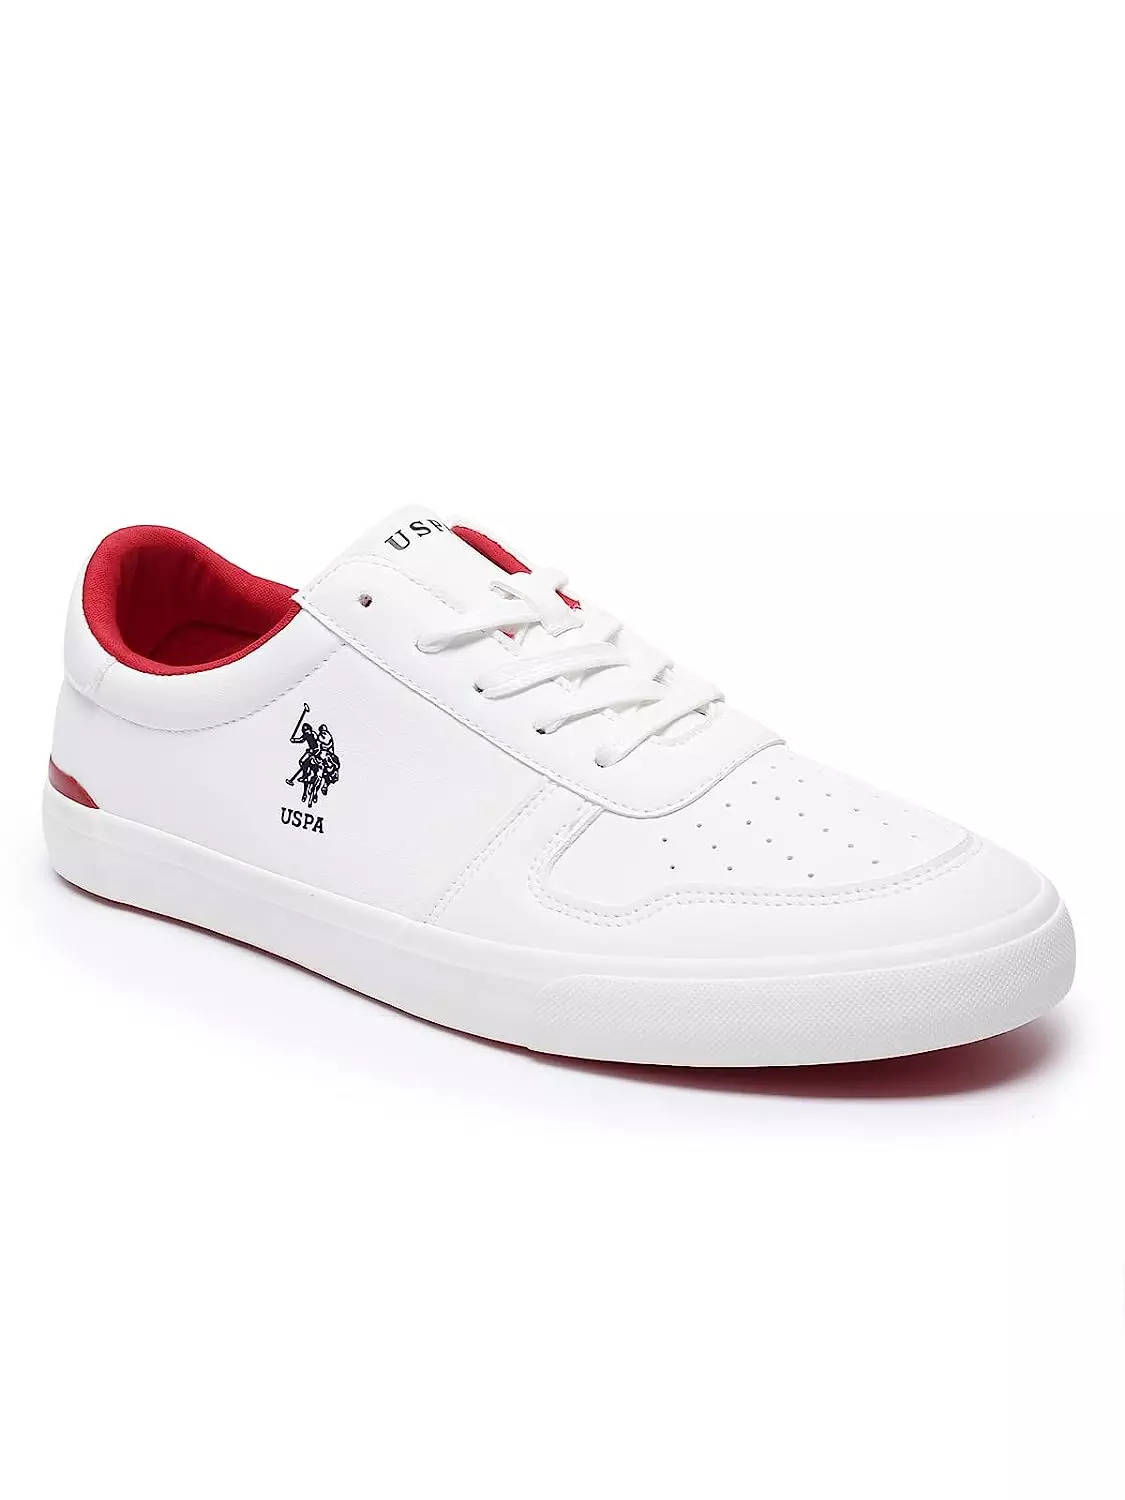 Adidas Stan Smith collegiate red sneaker size 11 | eBay